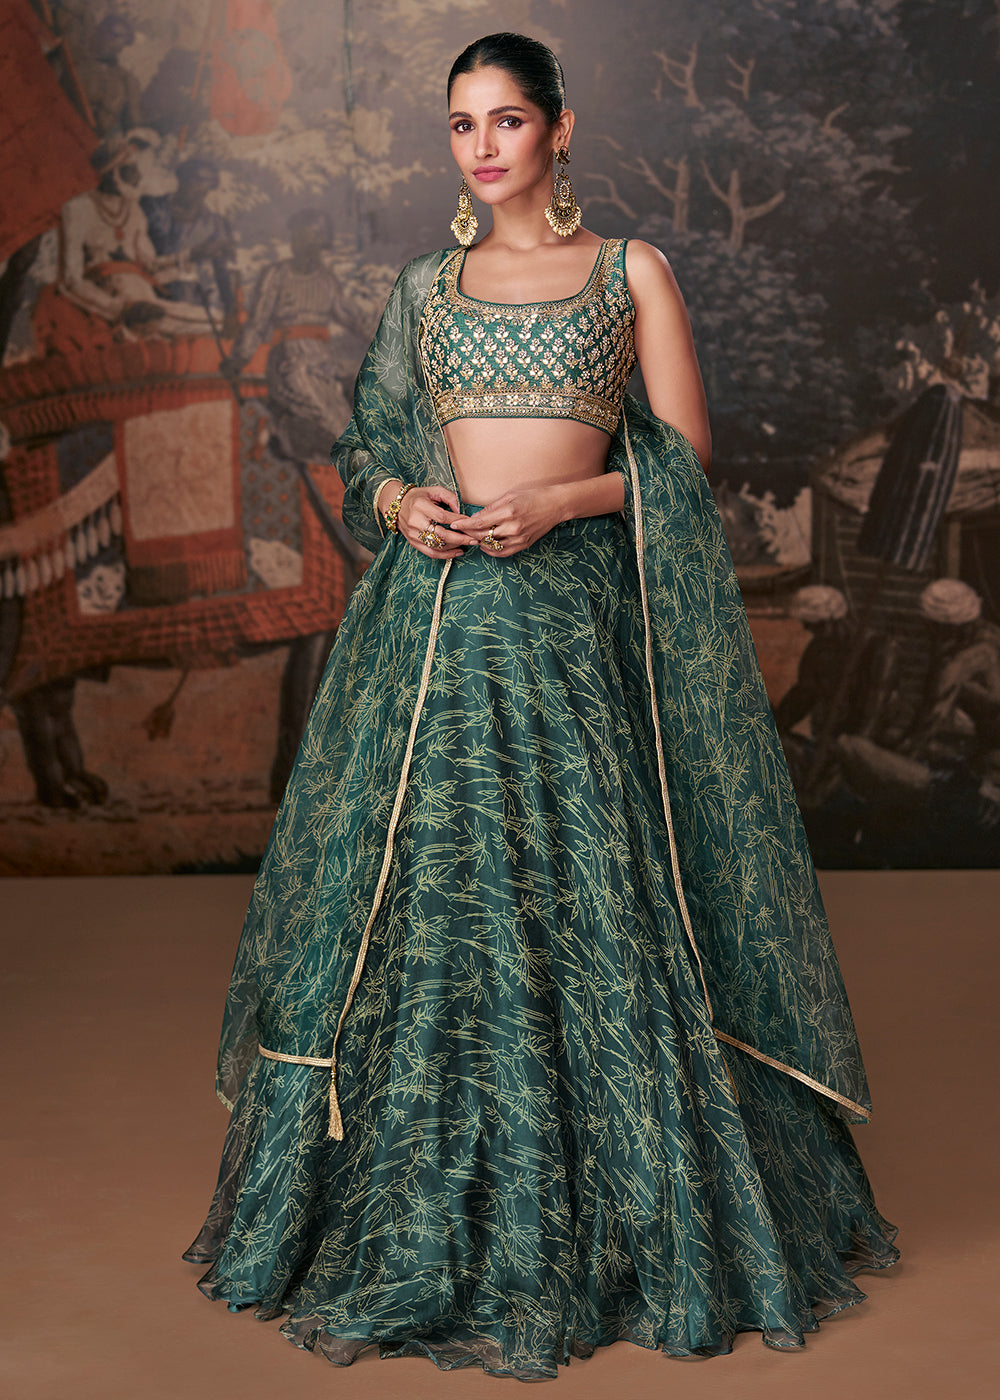 Buy Now Bottle Green Organza Silk Designer Wedding Lehenga Choli Online in USA, UK, Canada & Worldwide at Empress Clothing.